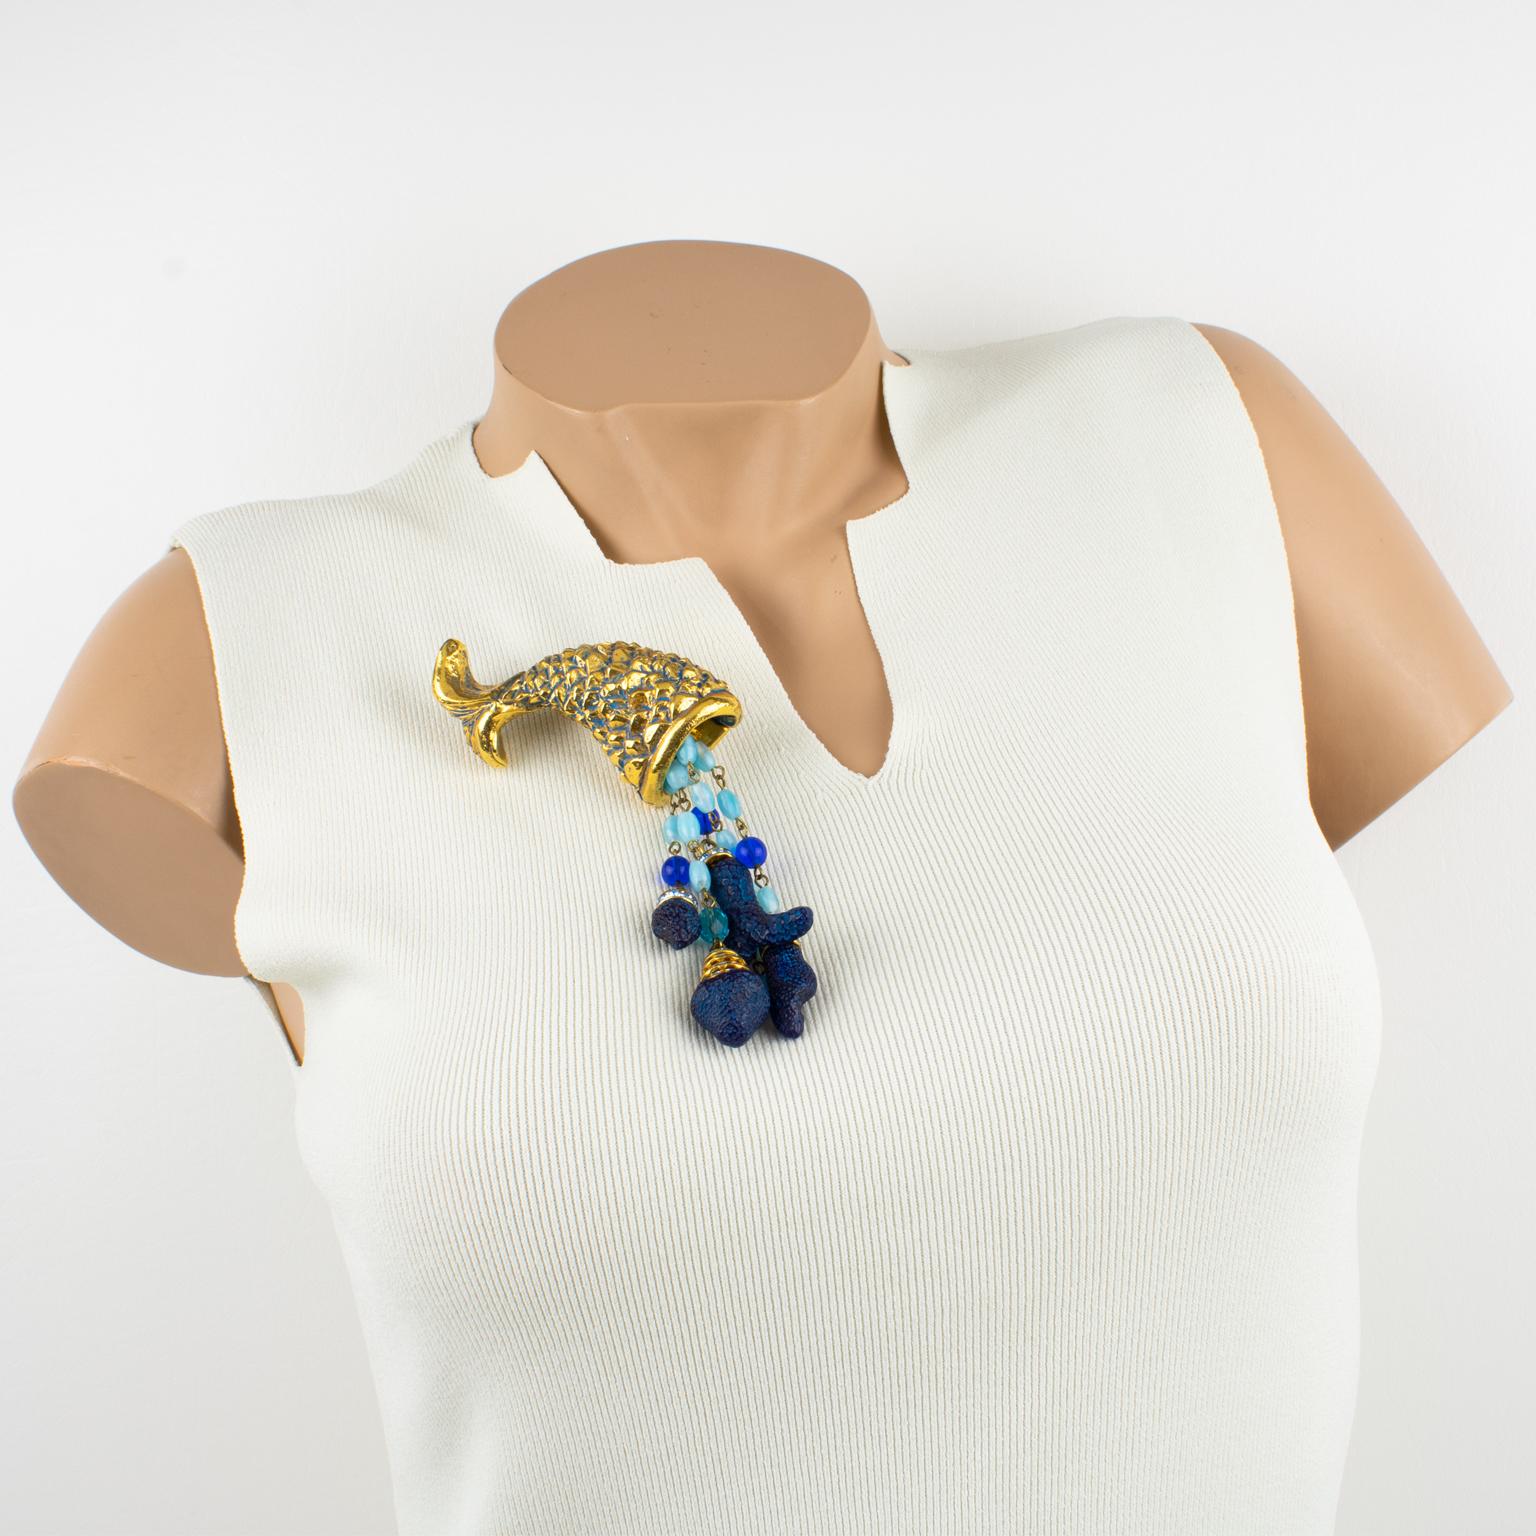 Modernist Kalinger Pin Brooch Gilt Resin Horn of Plenty with Blue Jeweled Charms For Sale